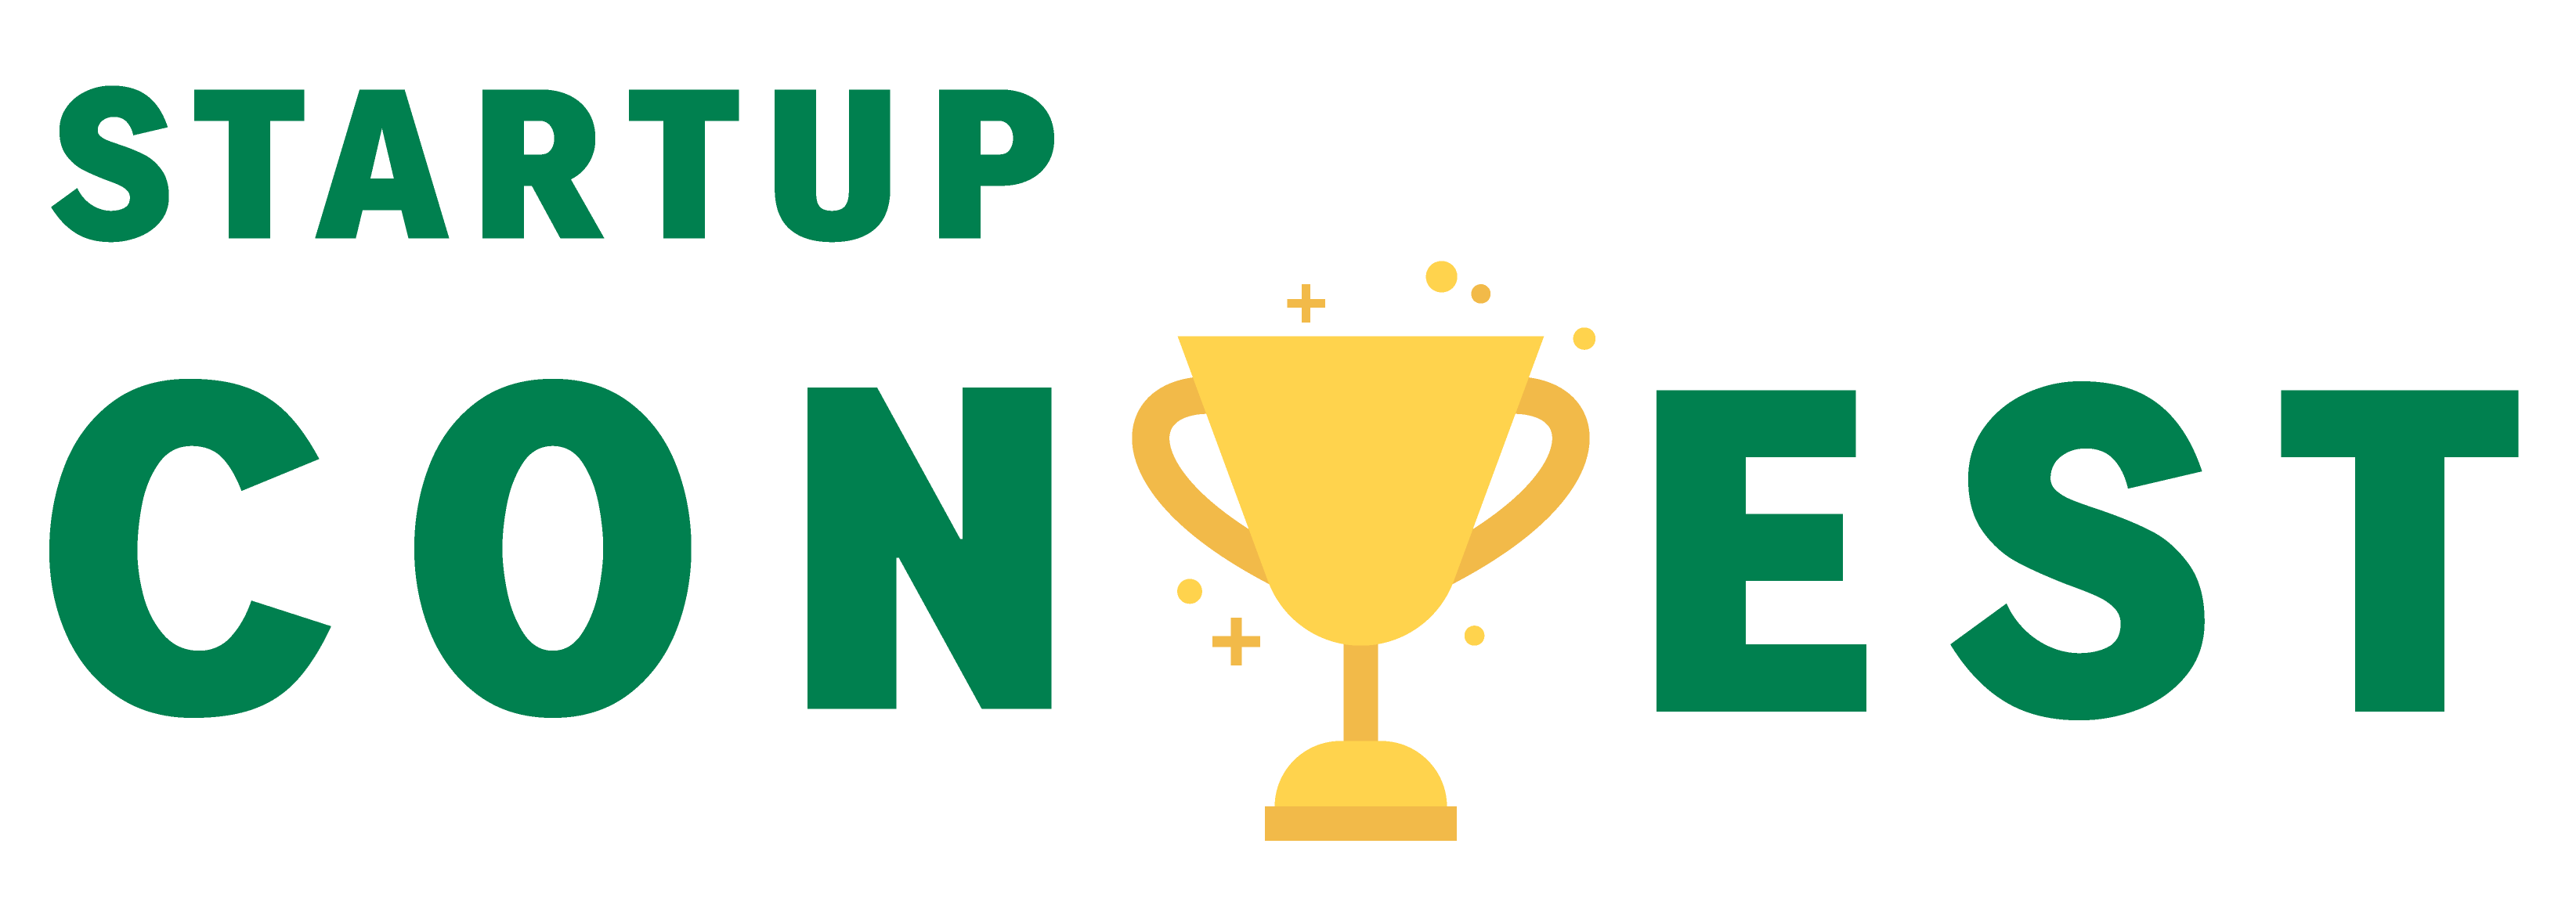 StartupContest-Logo